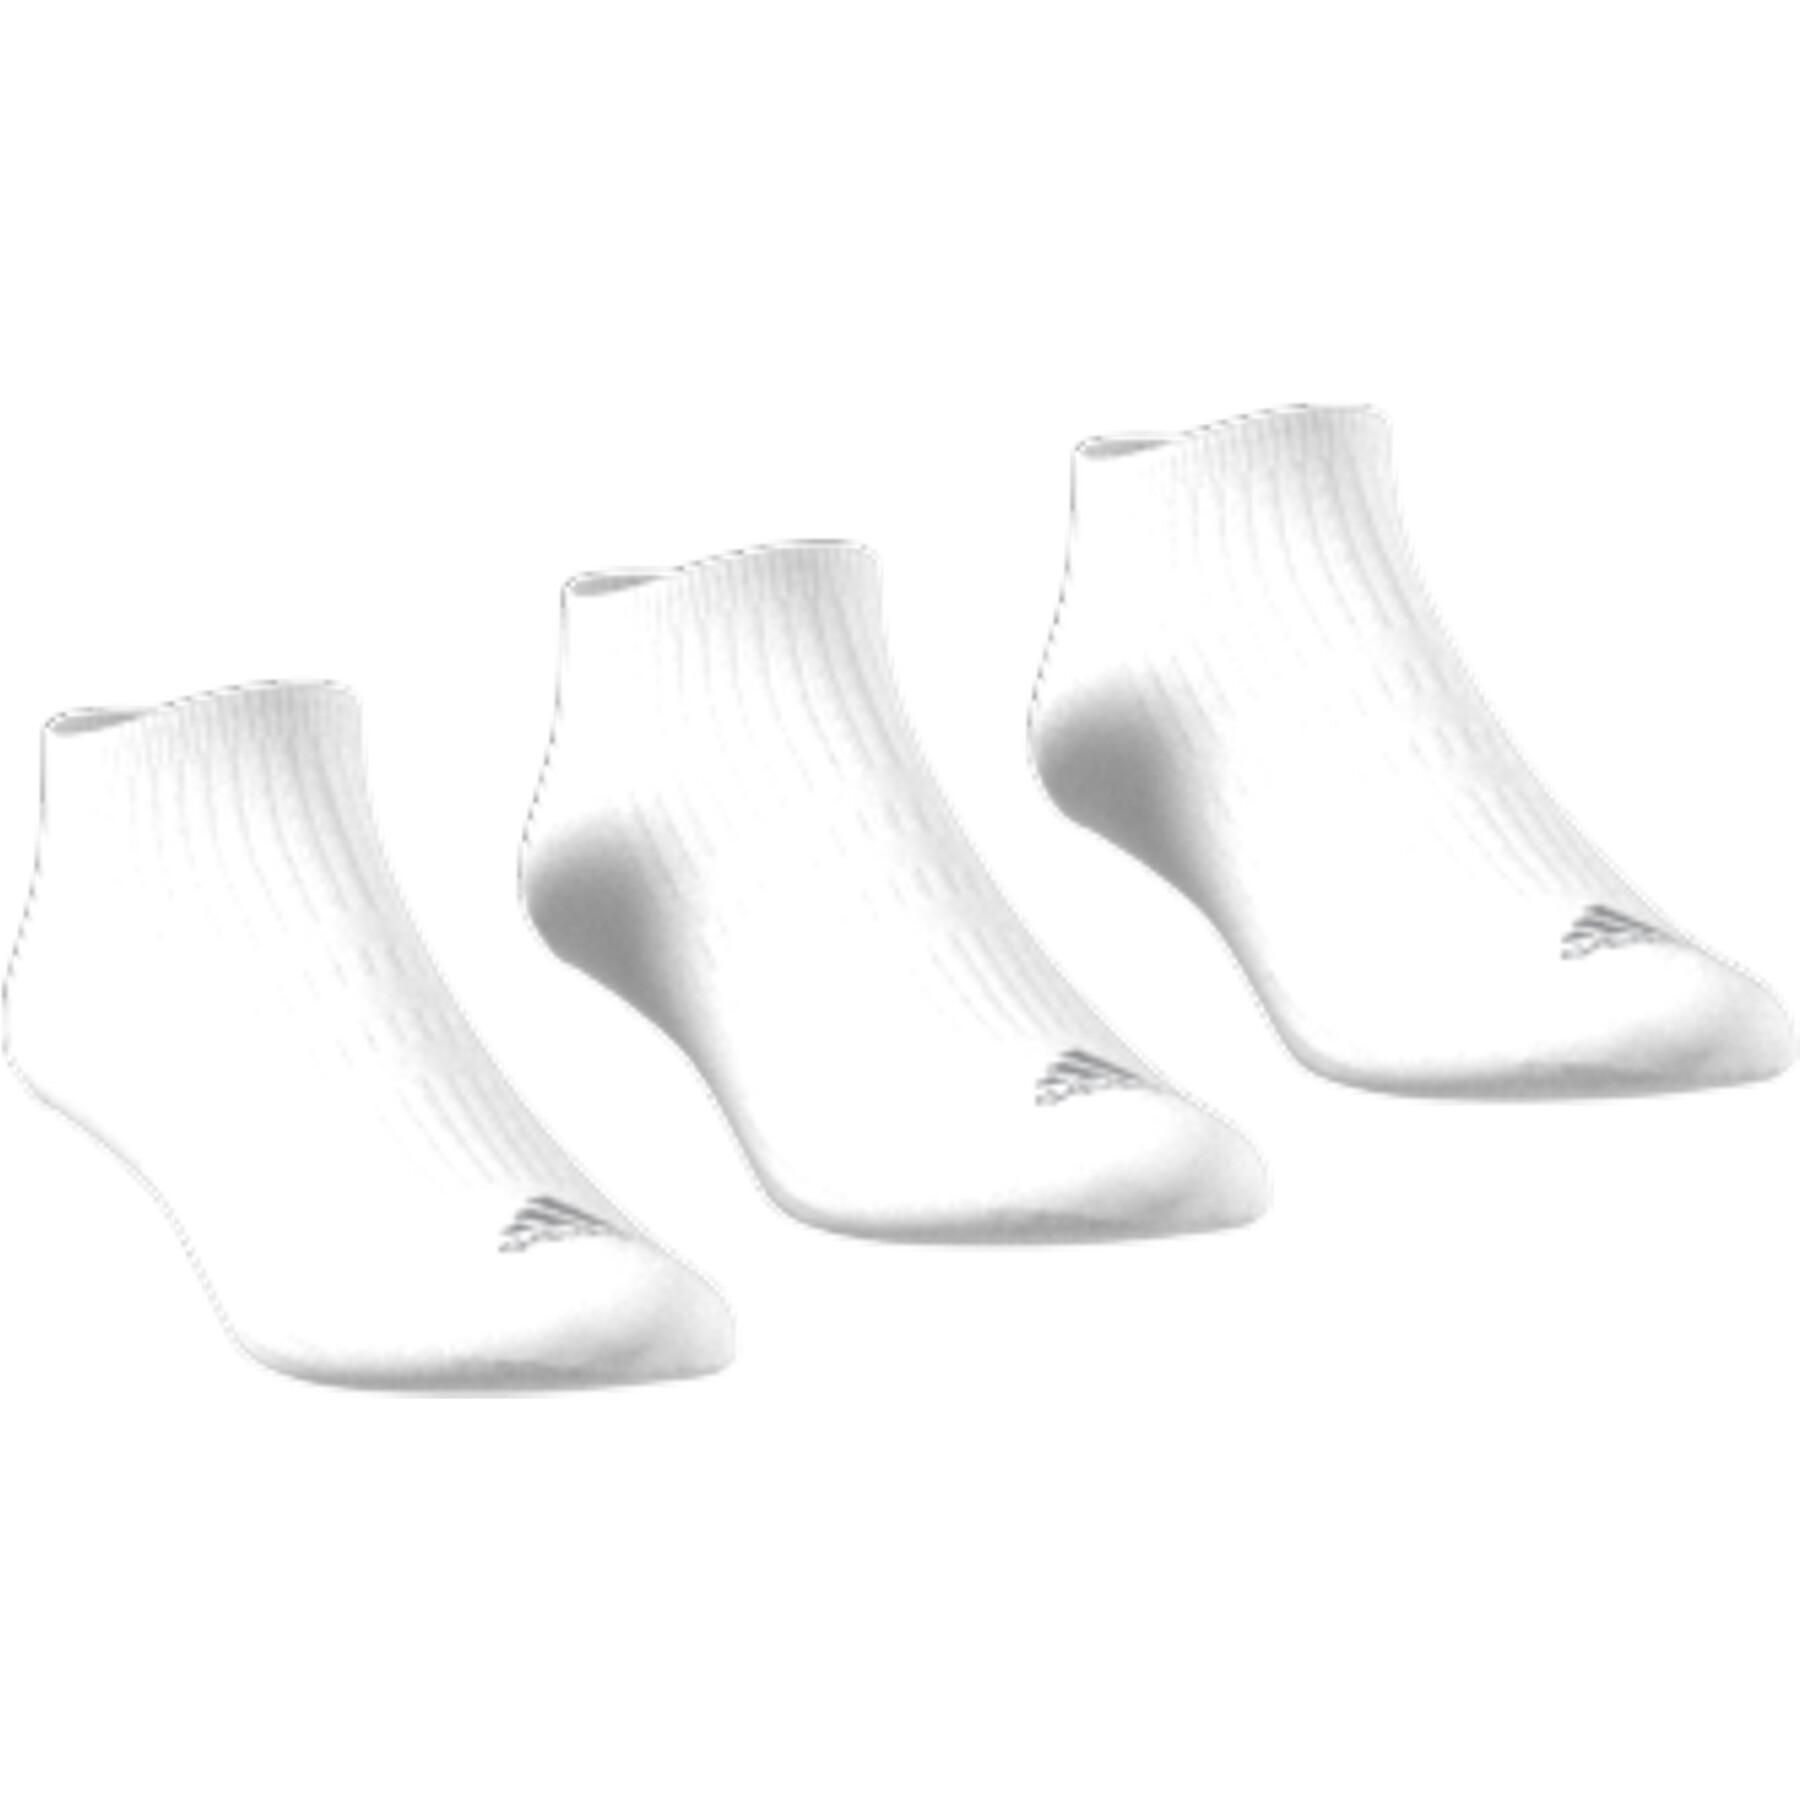 Women's socks adidas Comfort (3 paires)